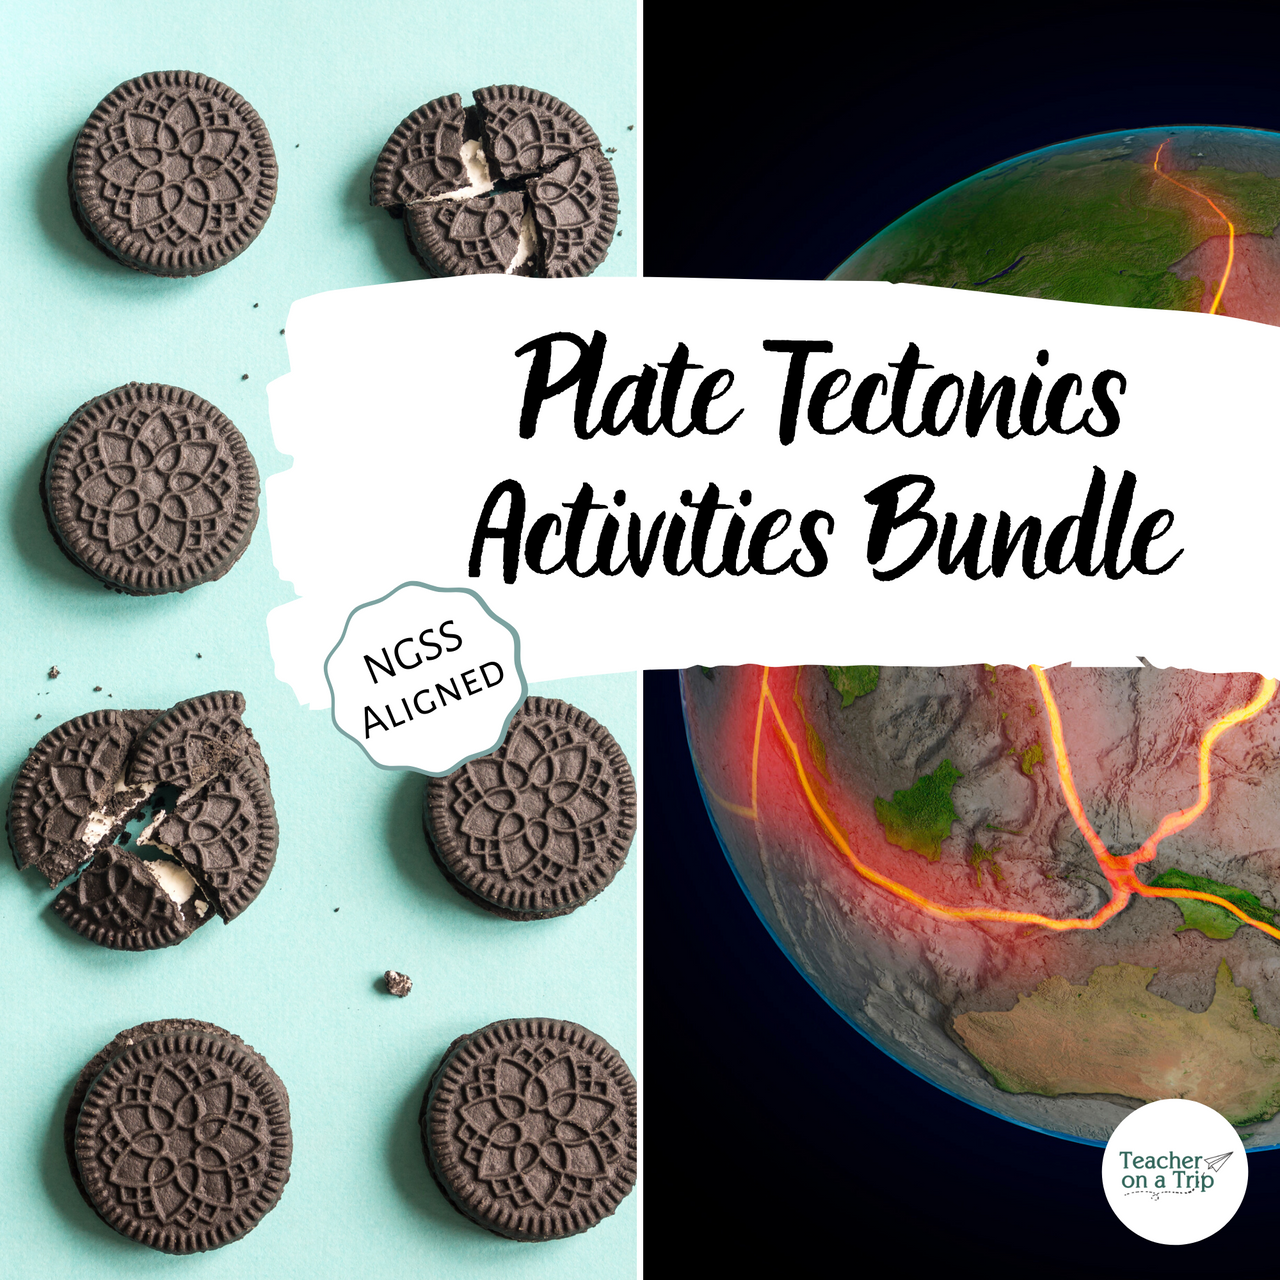 NGSS Plate Tectonics Activities Bundle